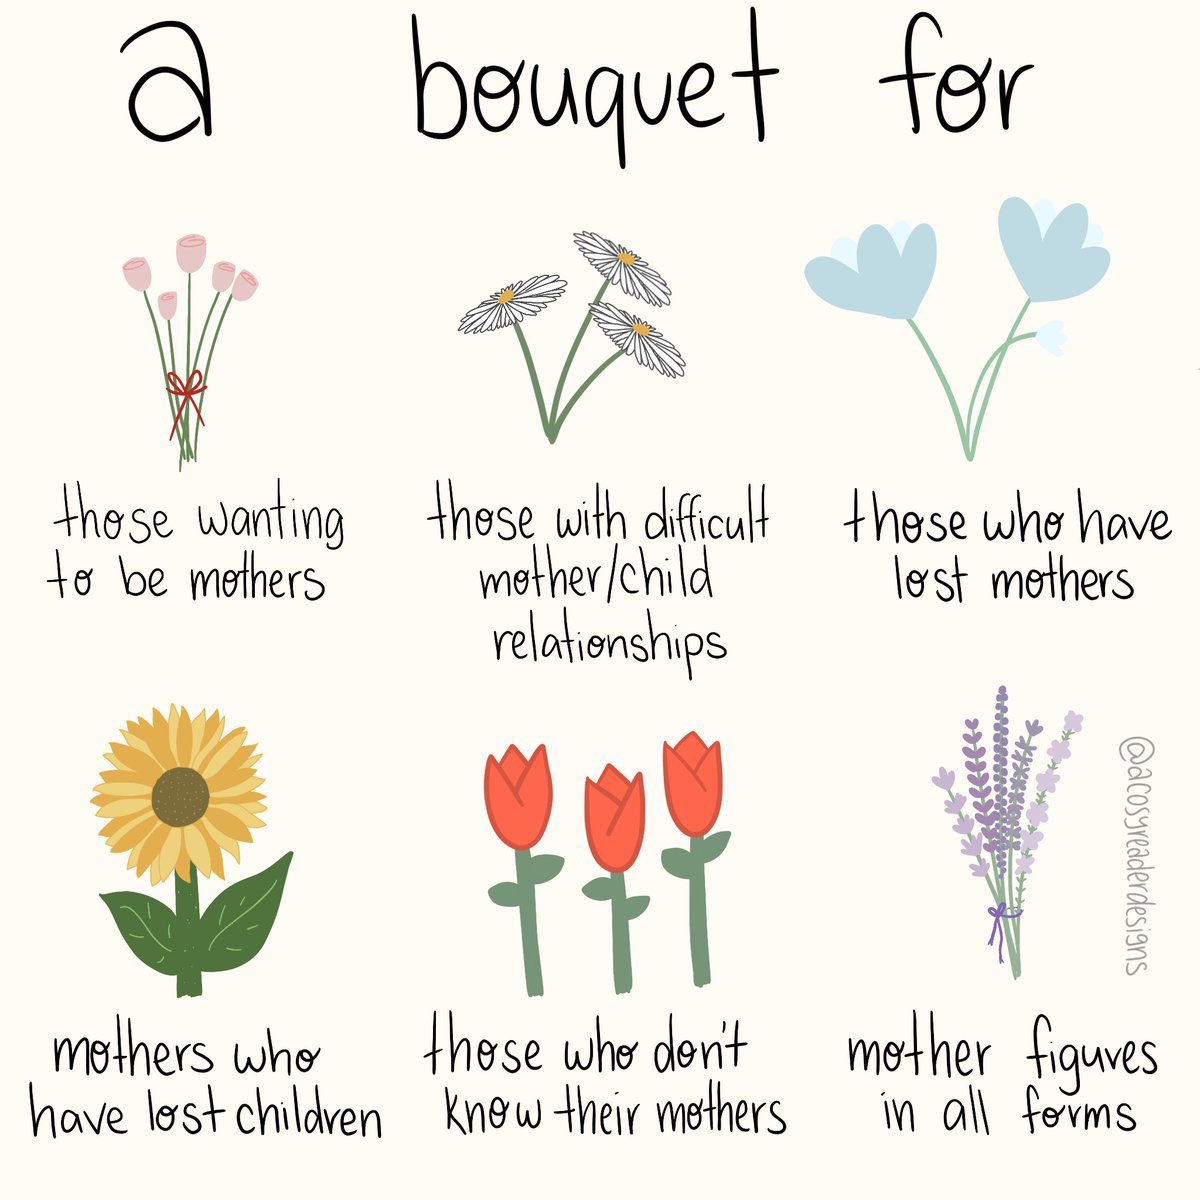 #MothersDay